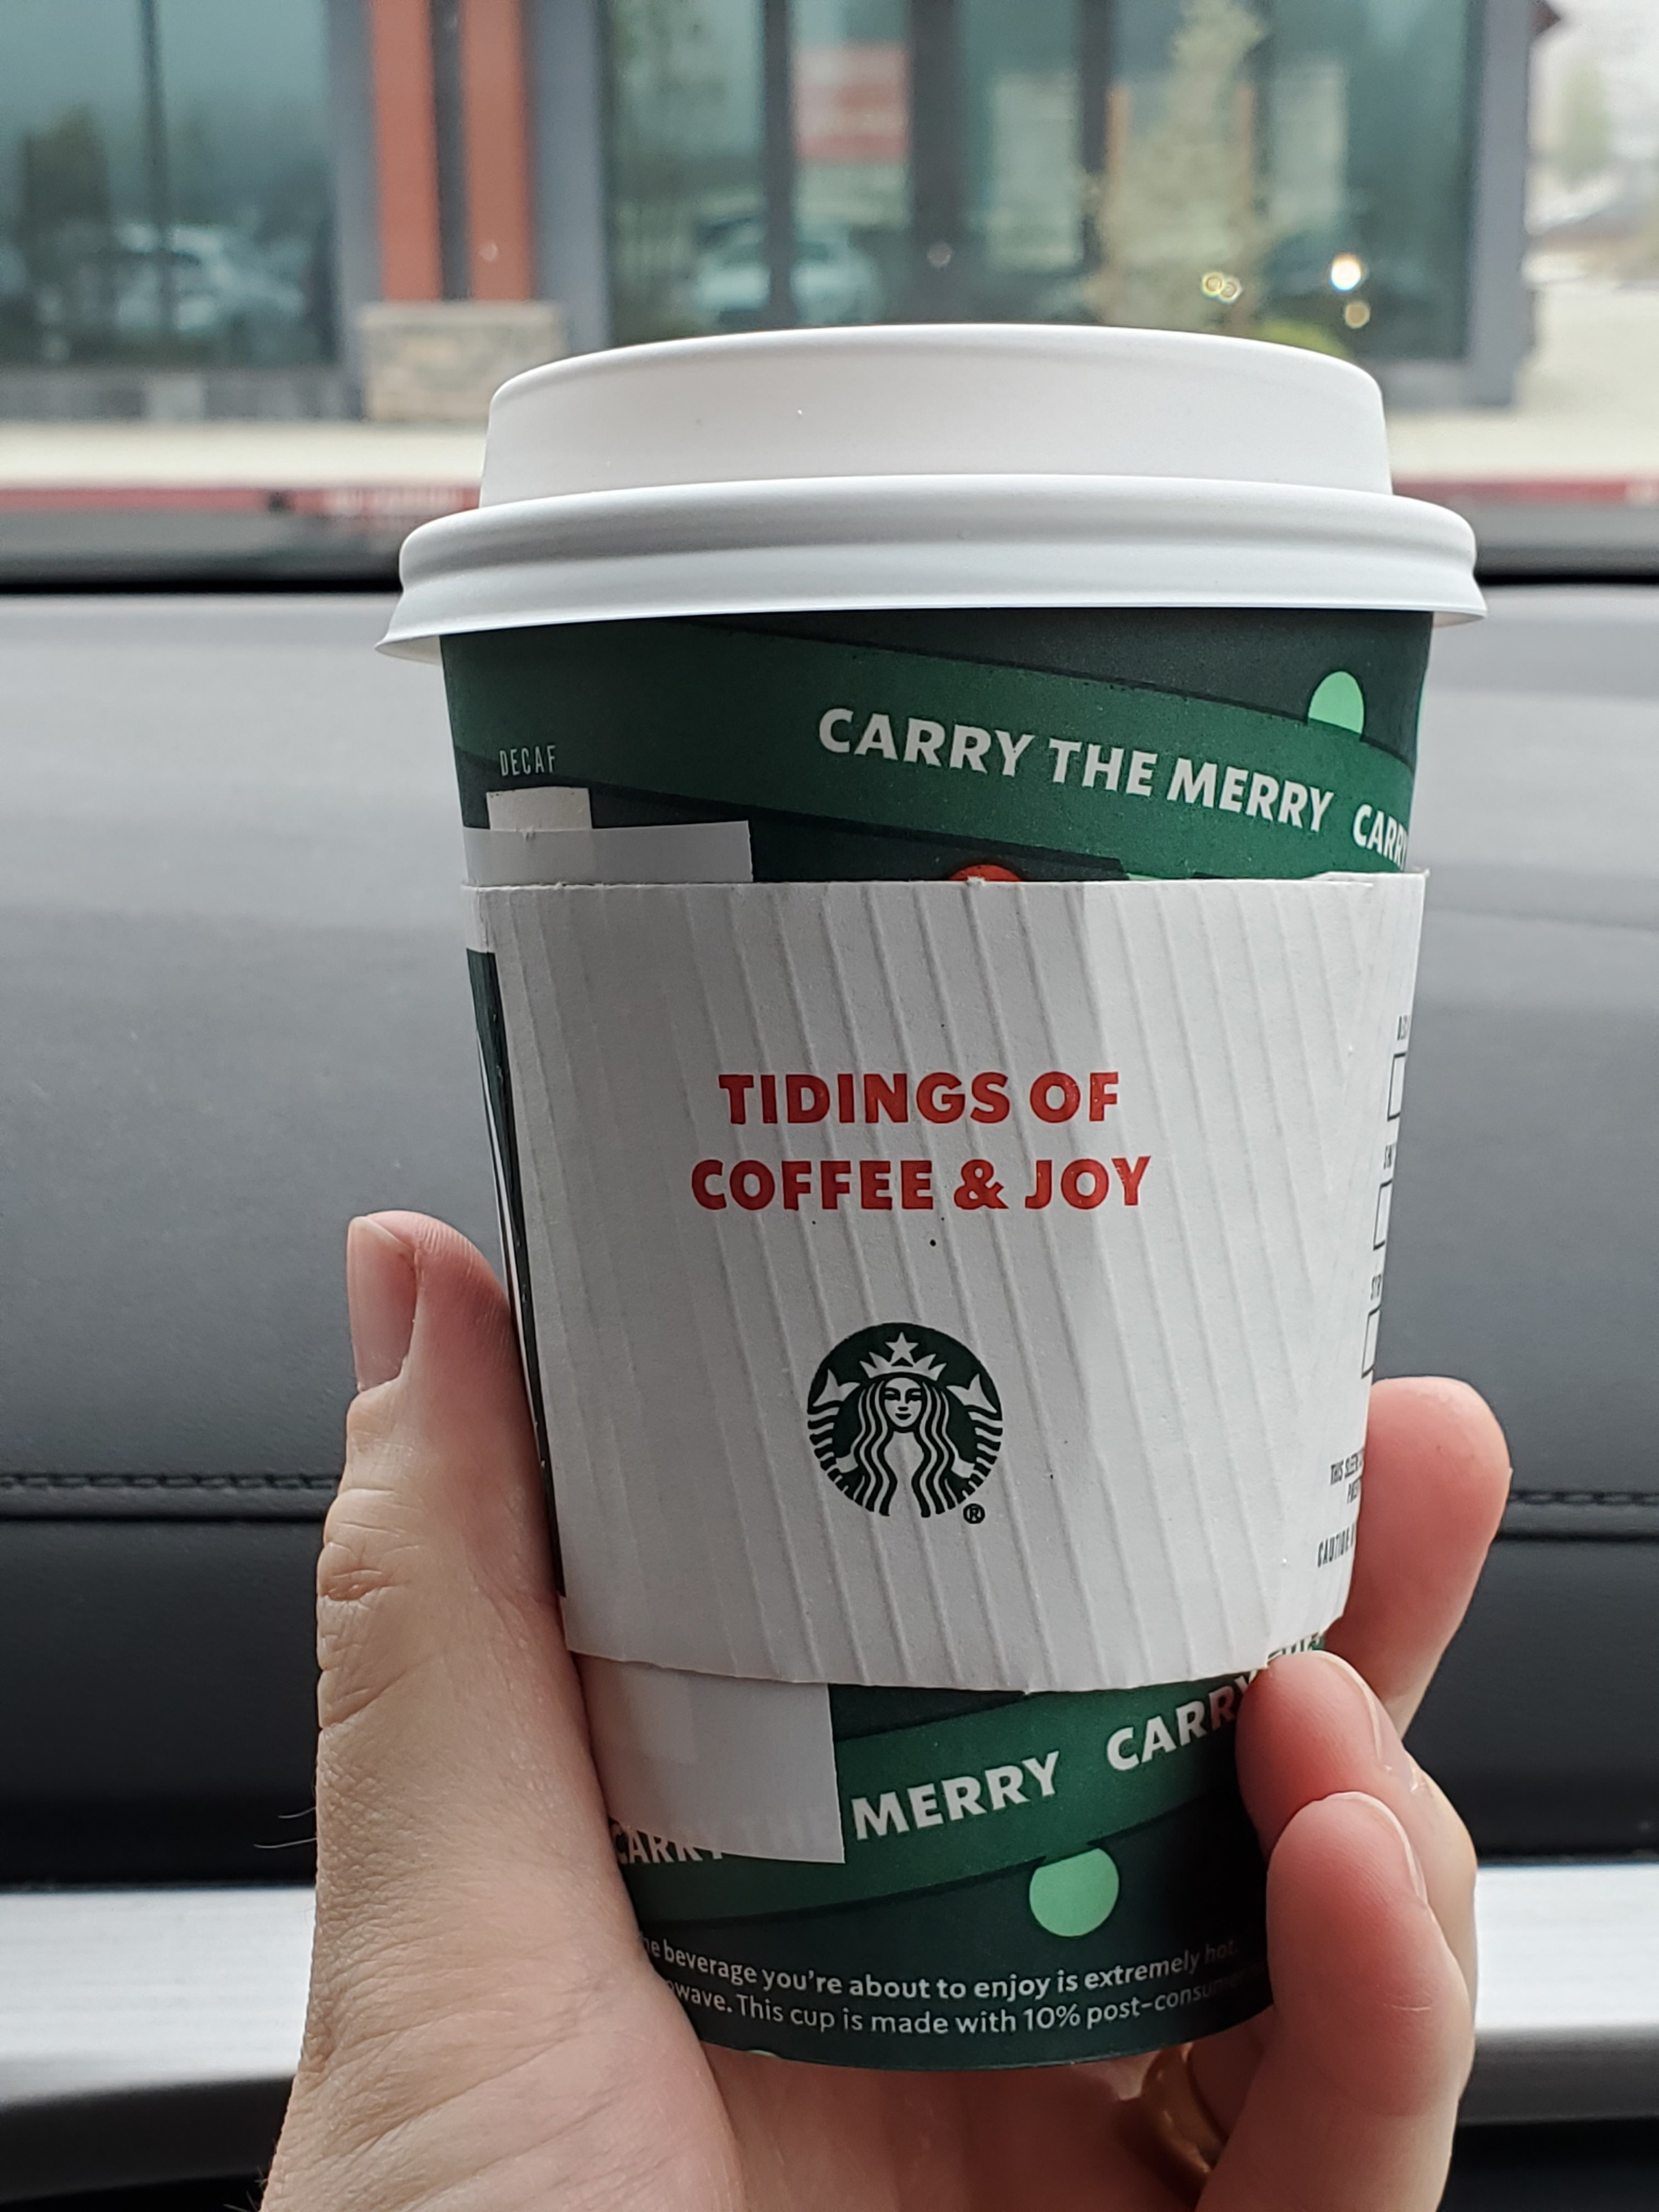 A Christmas-themed Starbucks cup